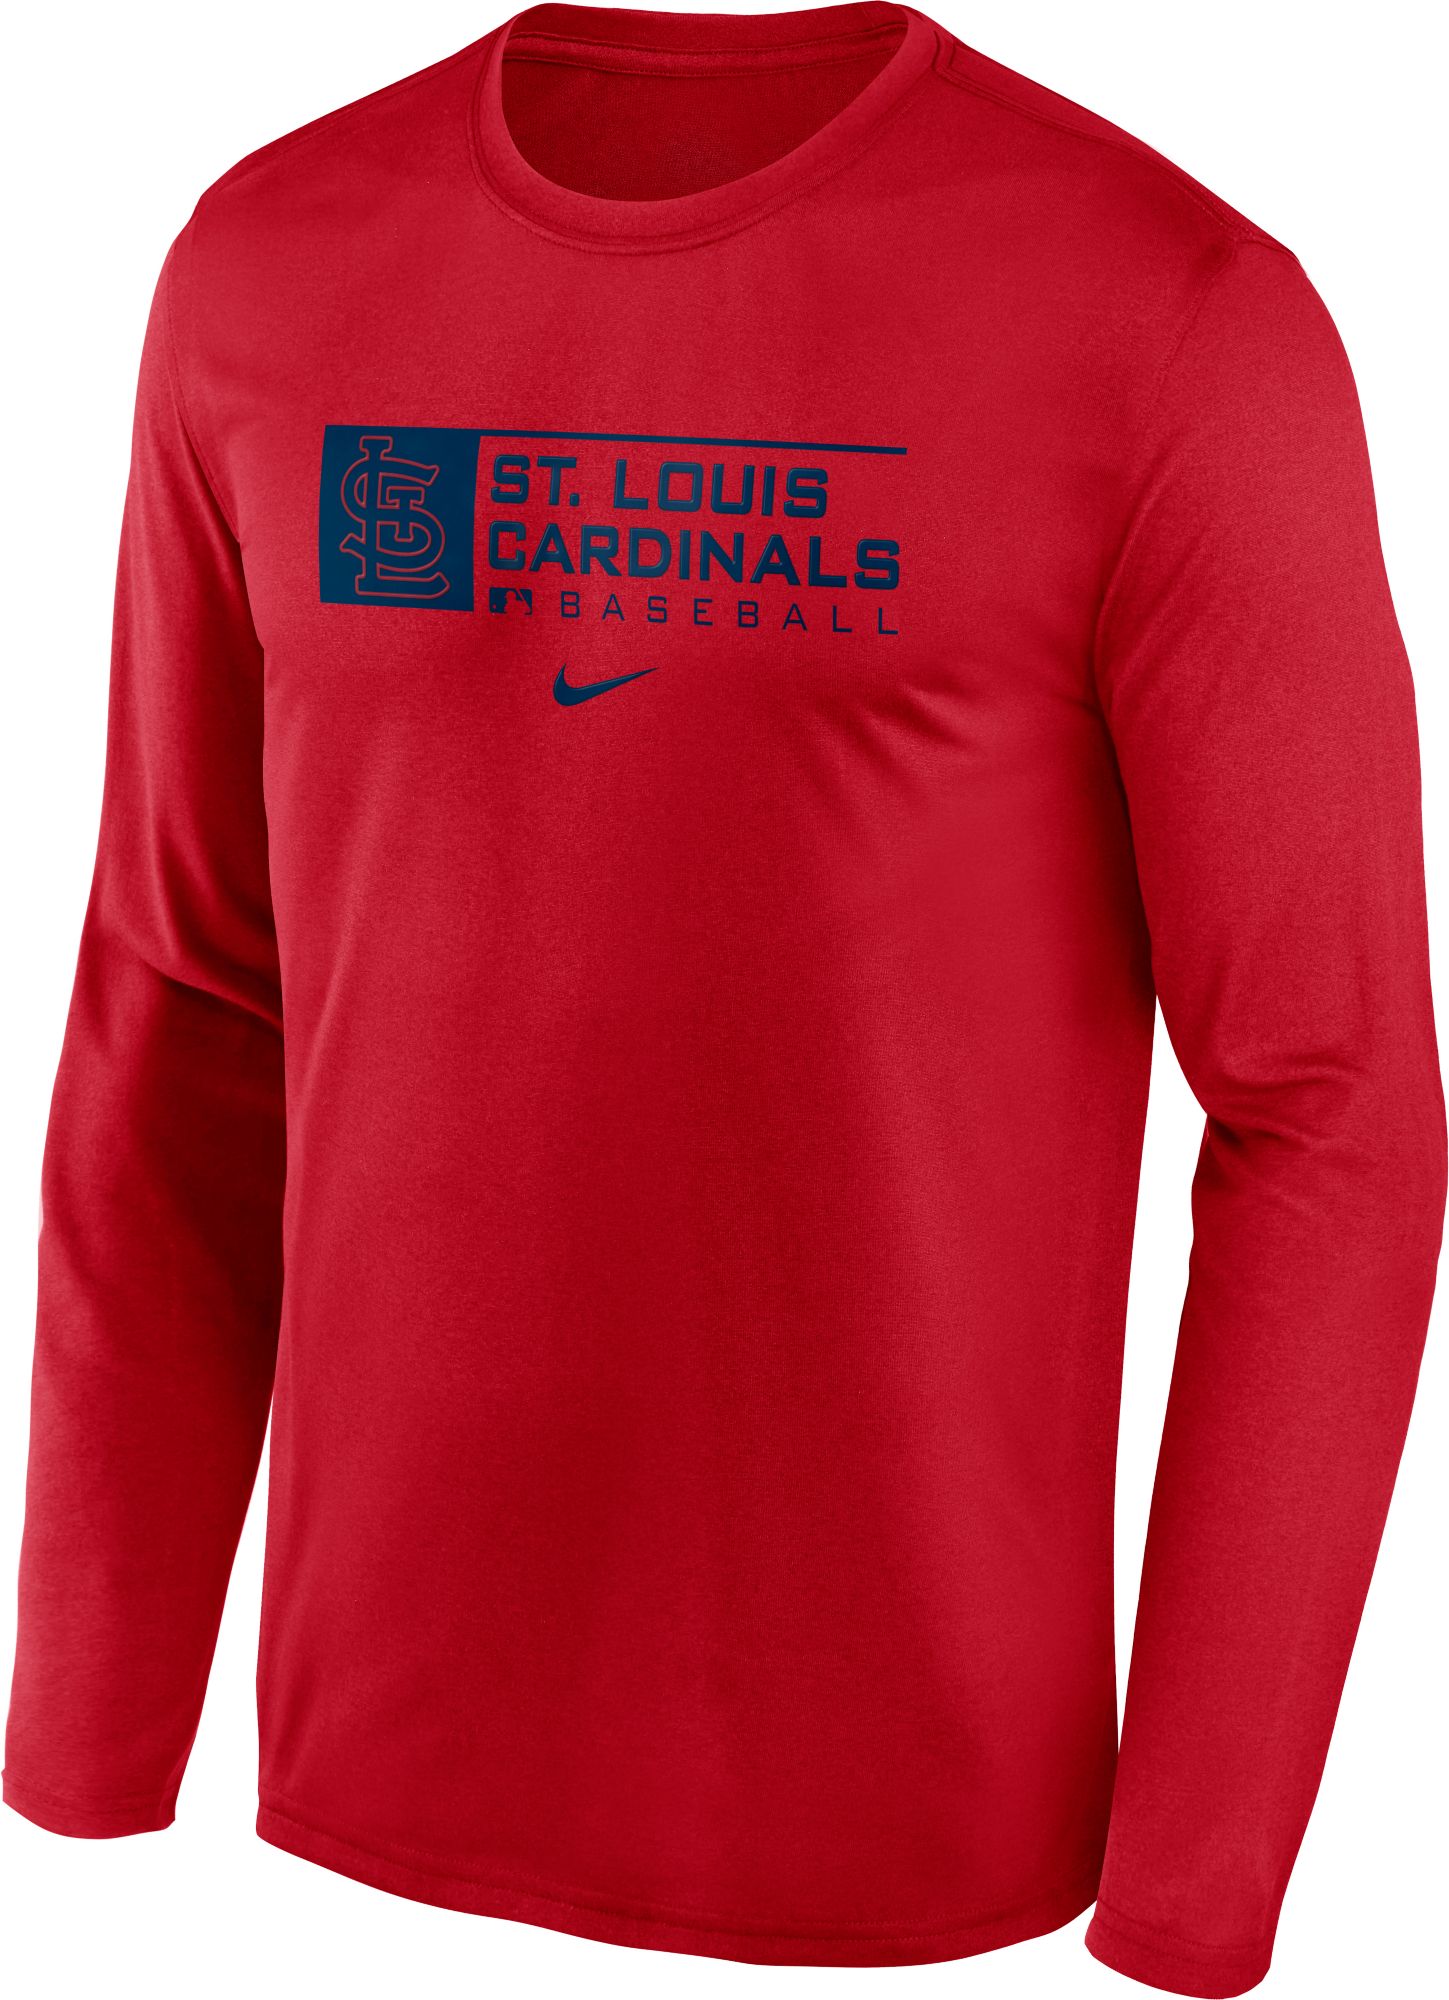 Nike Men's St. Louis Cardinals Navy Logo Franchise Polo T-Shirt